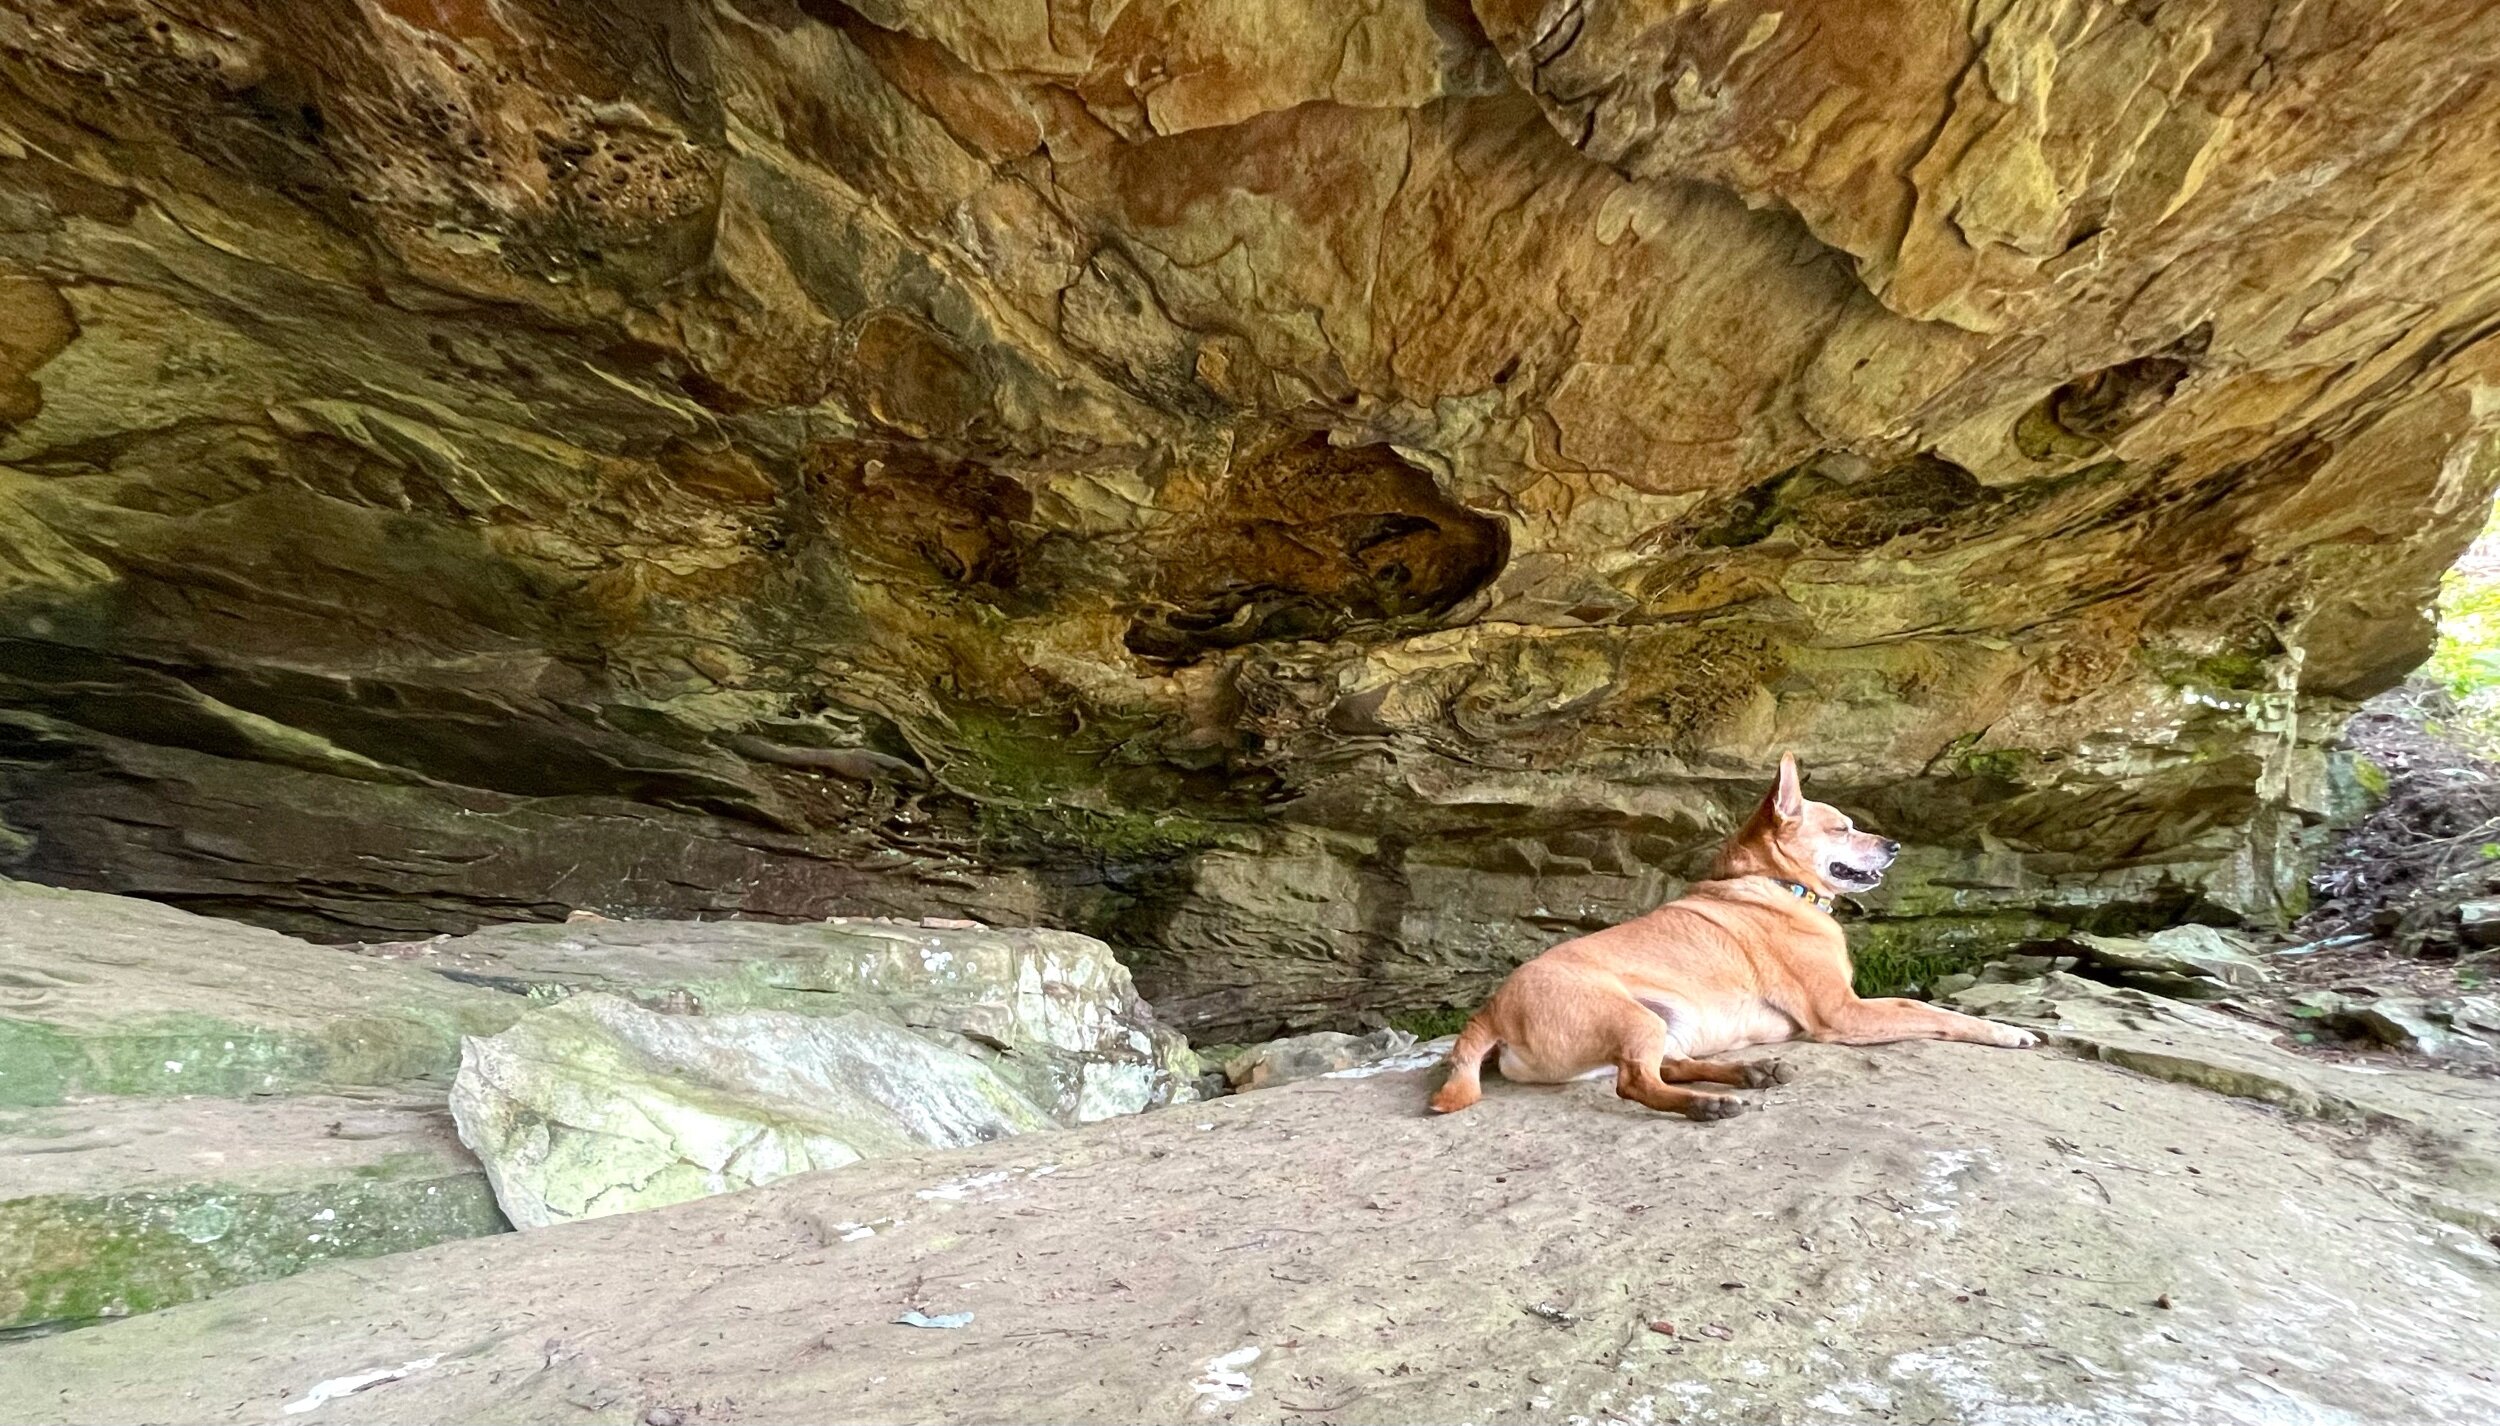  Taking a break under an overhanging rock at Cumberland Falls. 